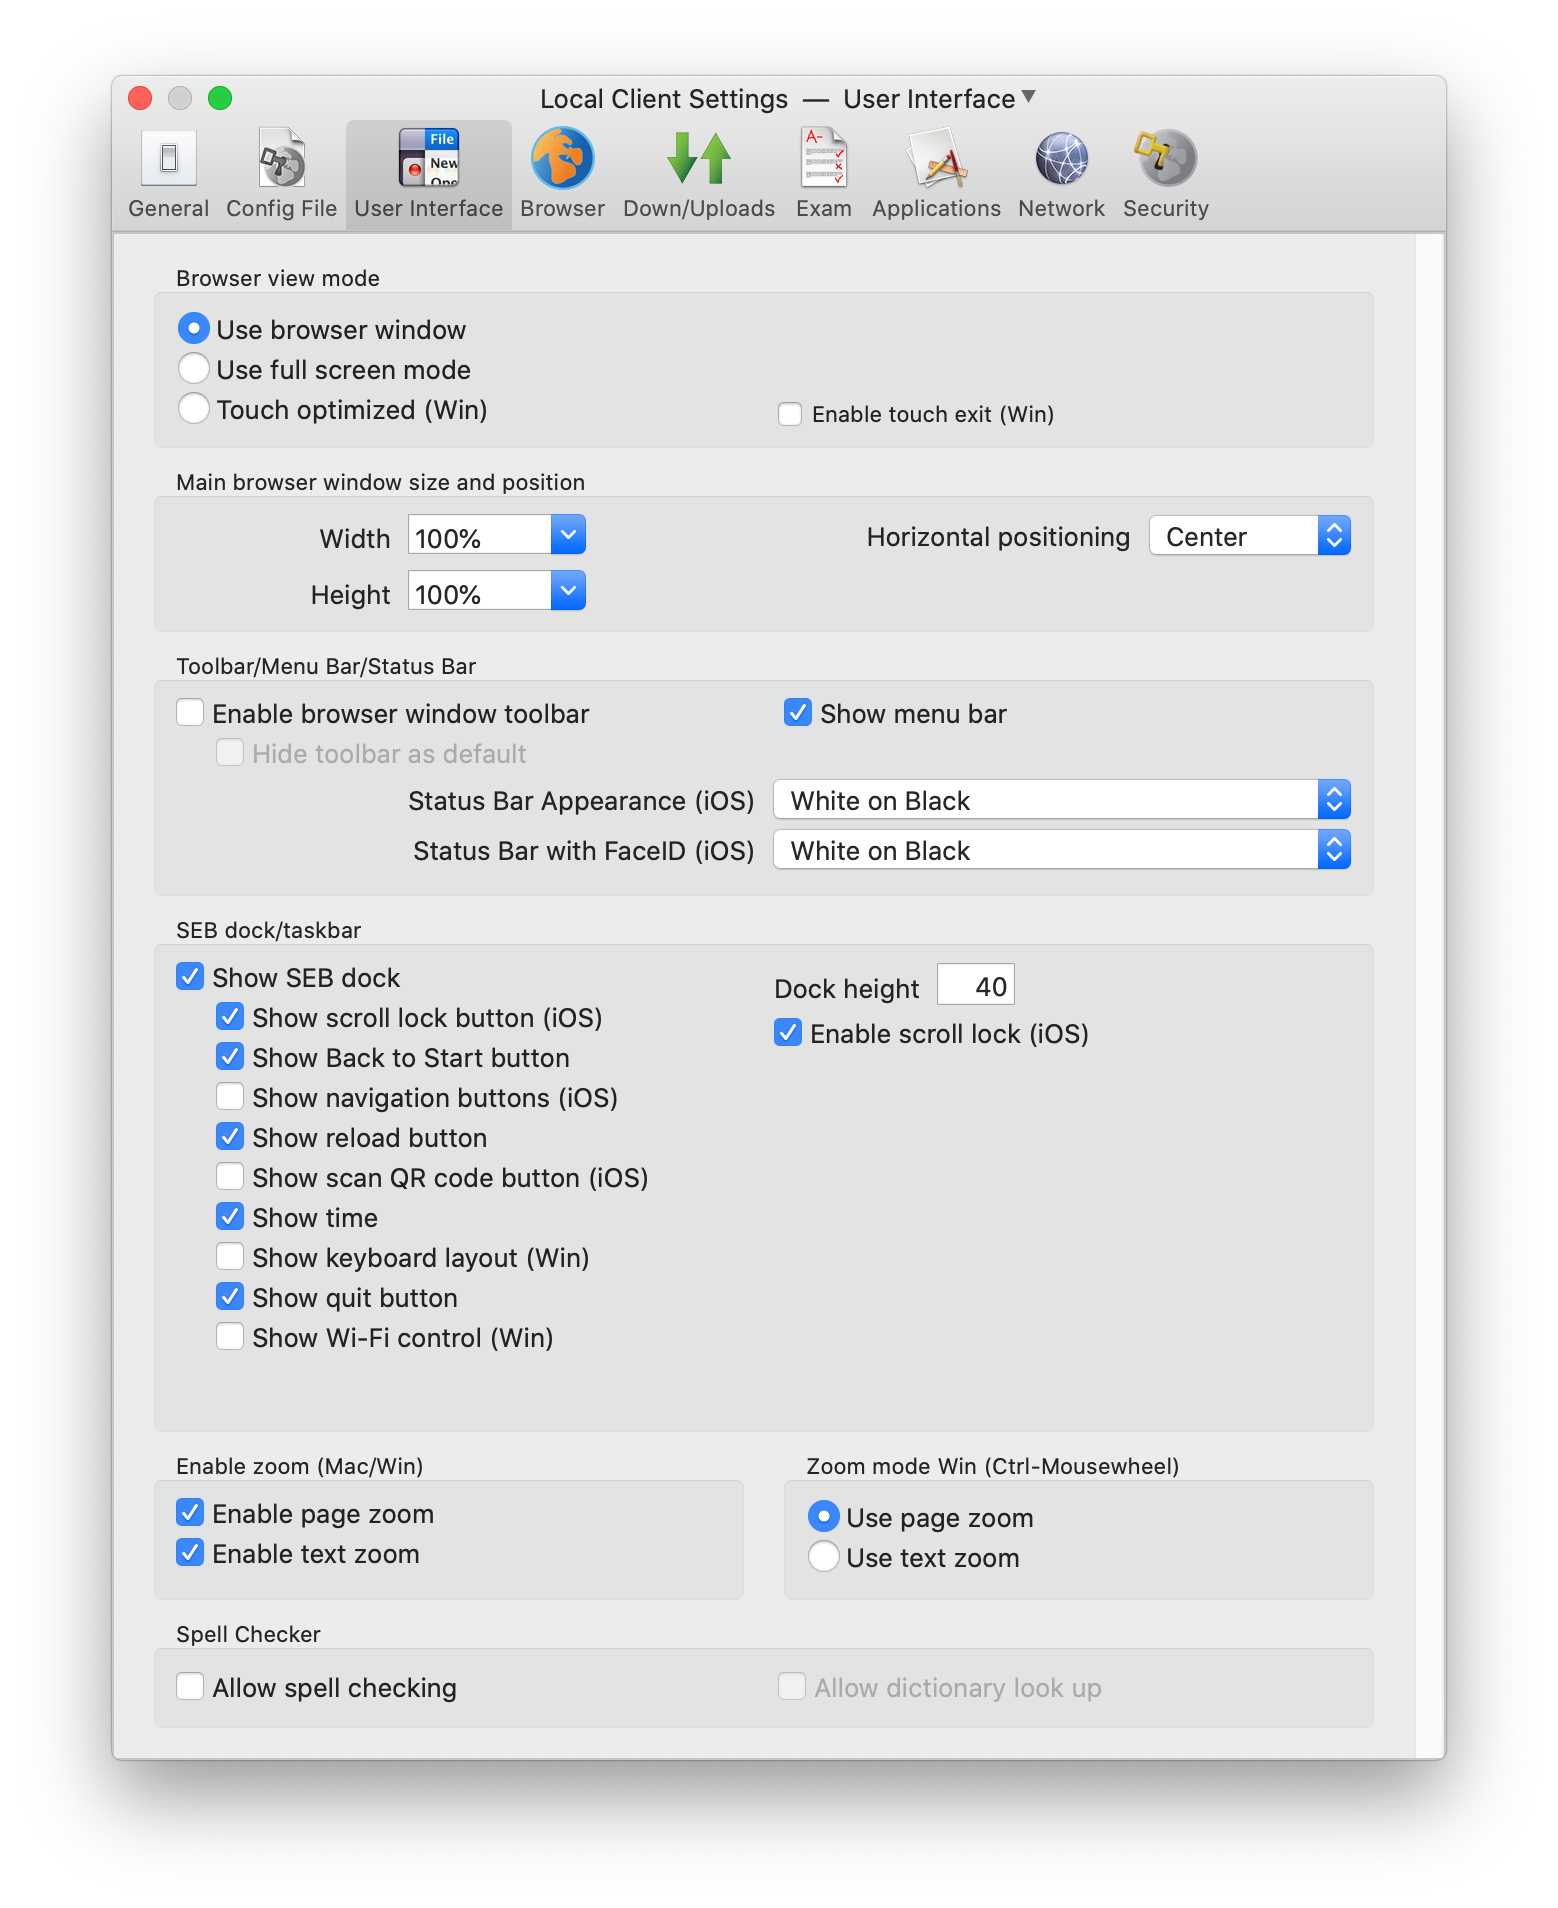 horizon client for mac 10.10